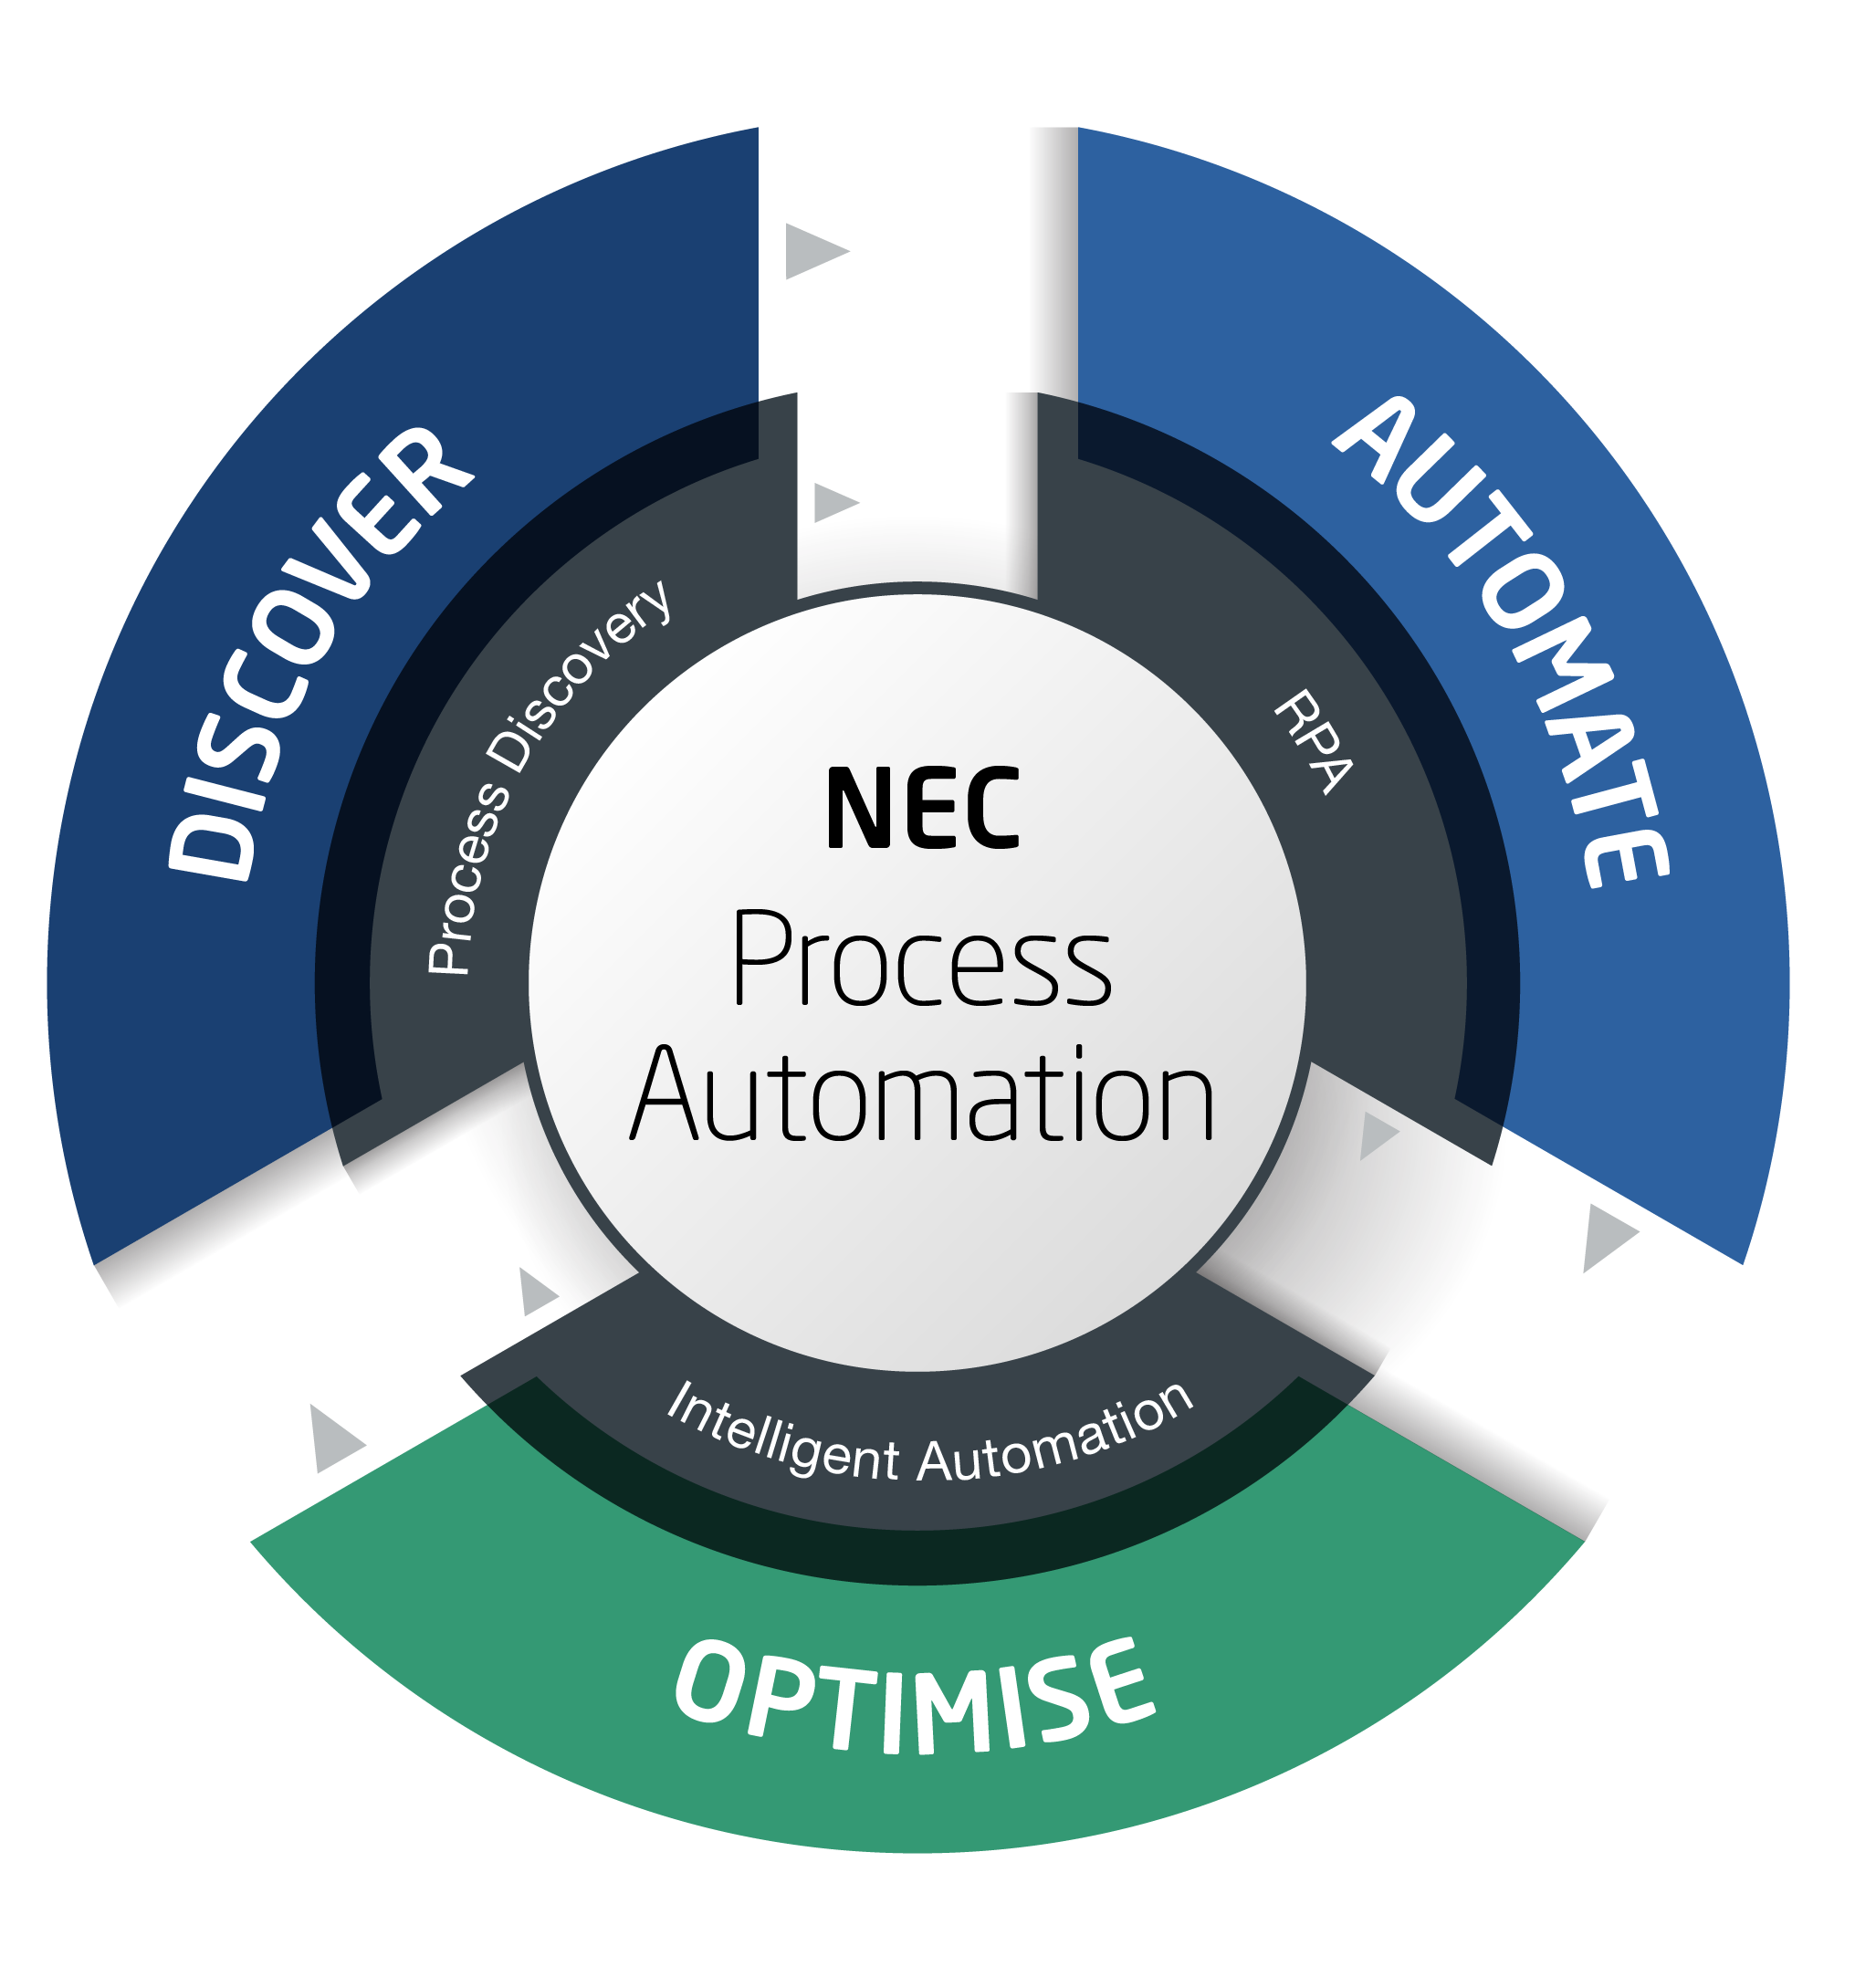 NEC Process Automation